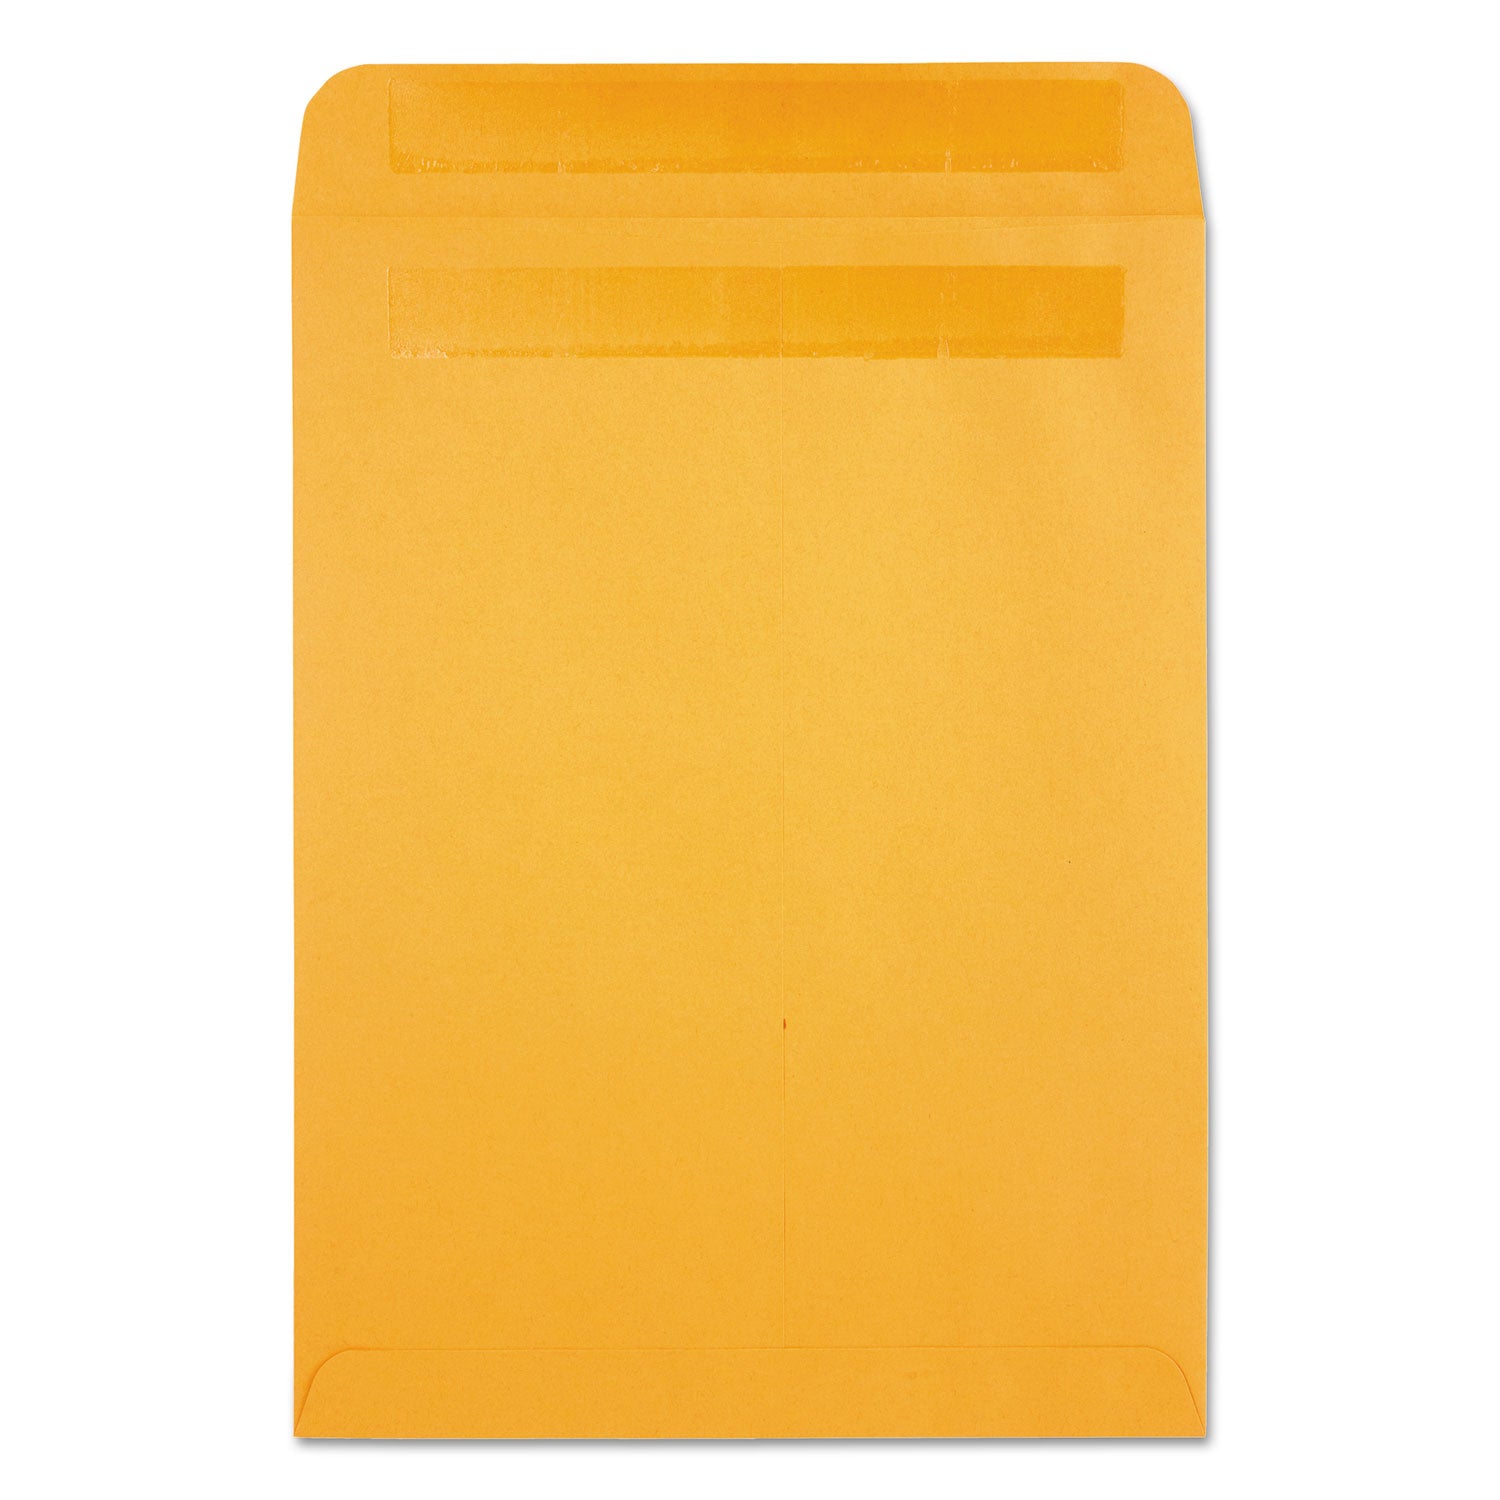 Redi-Seal Catalog Envelope, #10 1/2, Cheese Blade Flap, Redi-Seal Adhesive Closure, 9 x 12, Brown Kraft, 250/Box - 